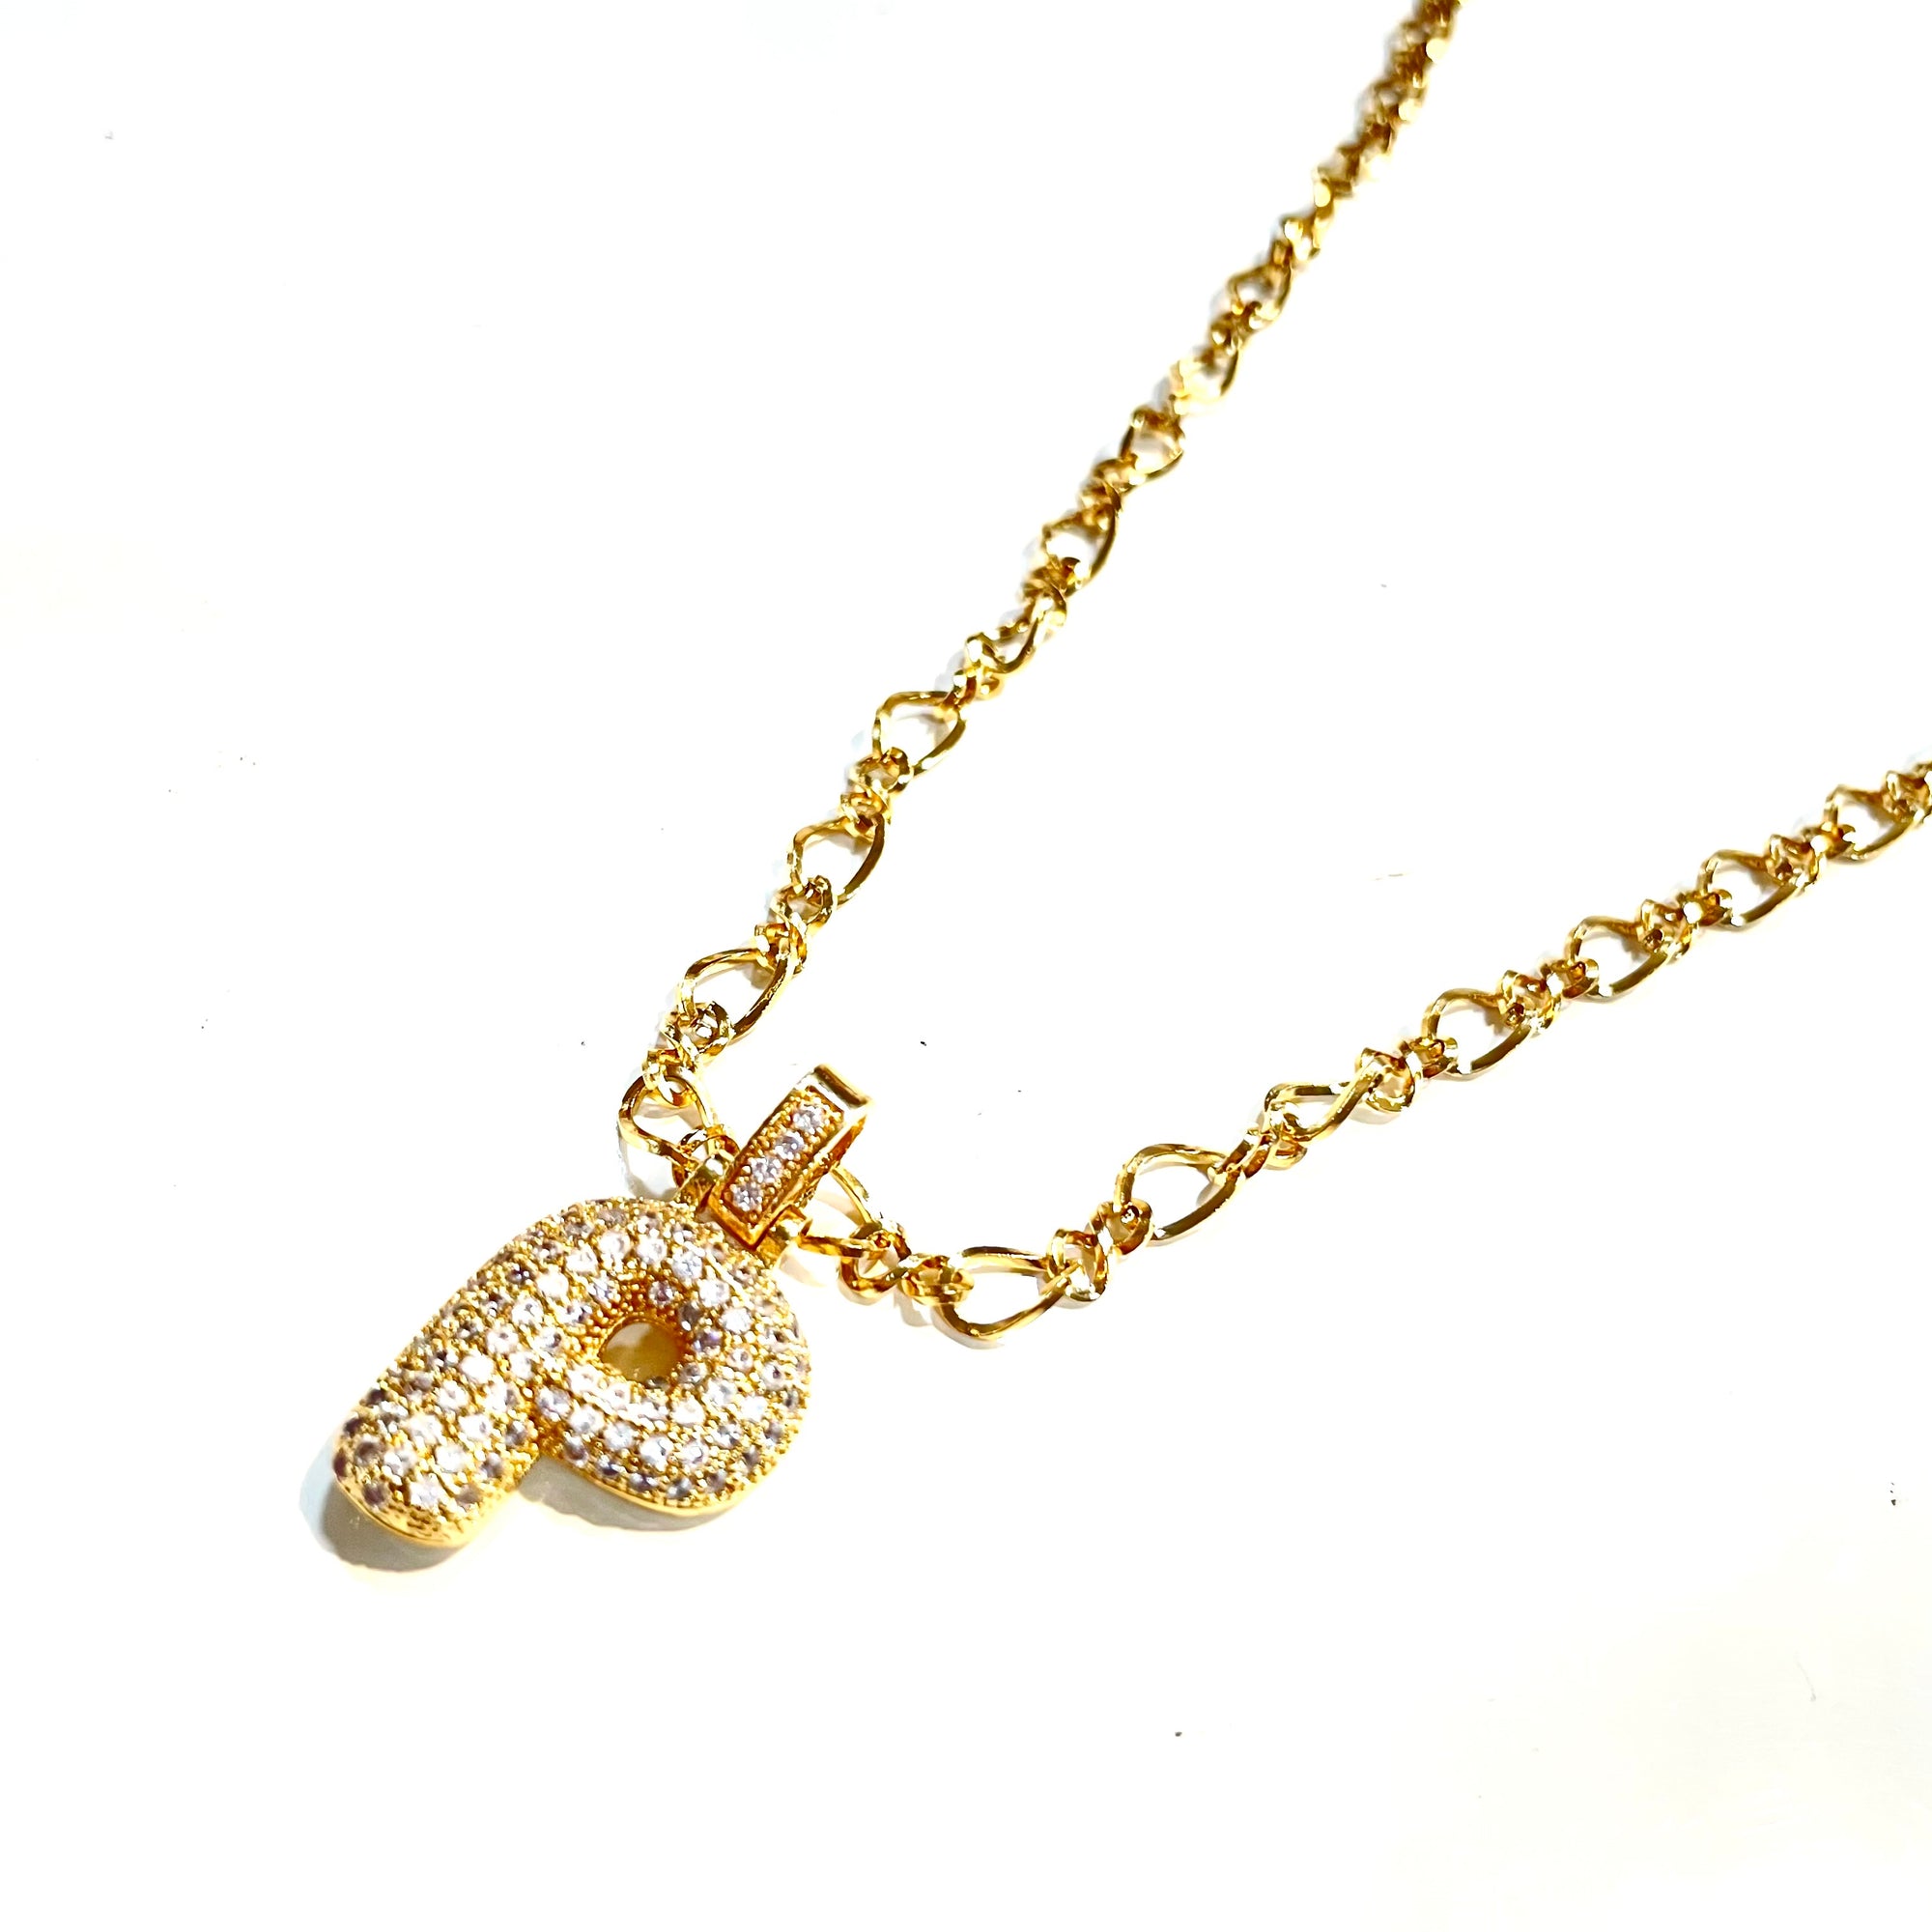 Initial Impression Necklace Necklaces Cerese D, Inc. Gold P 